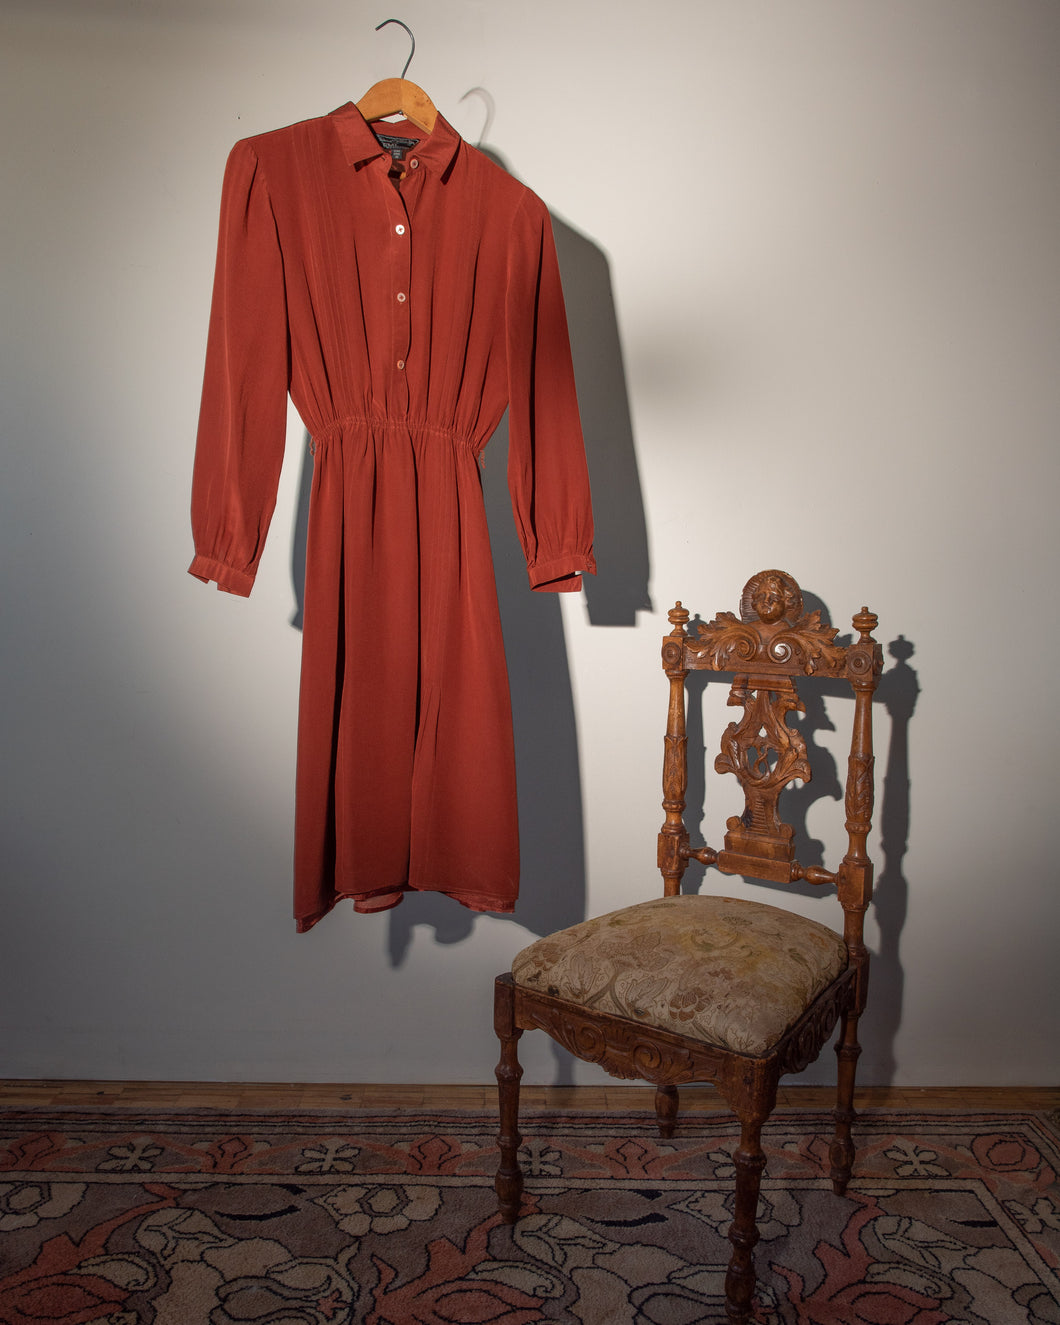 70s Burnt Orange Silk Shirtwaist Dress